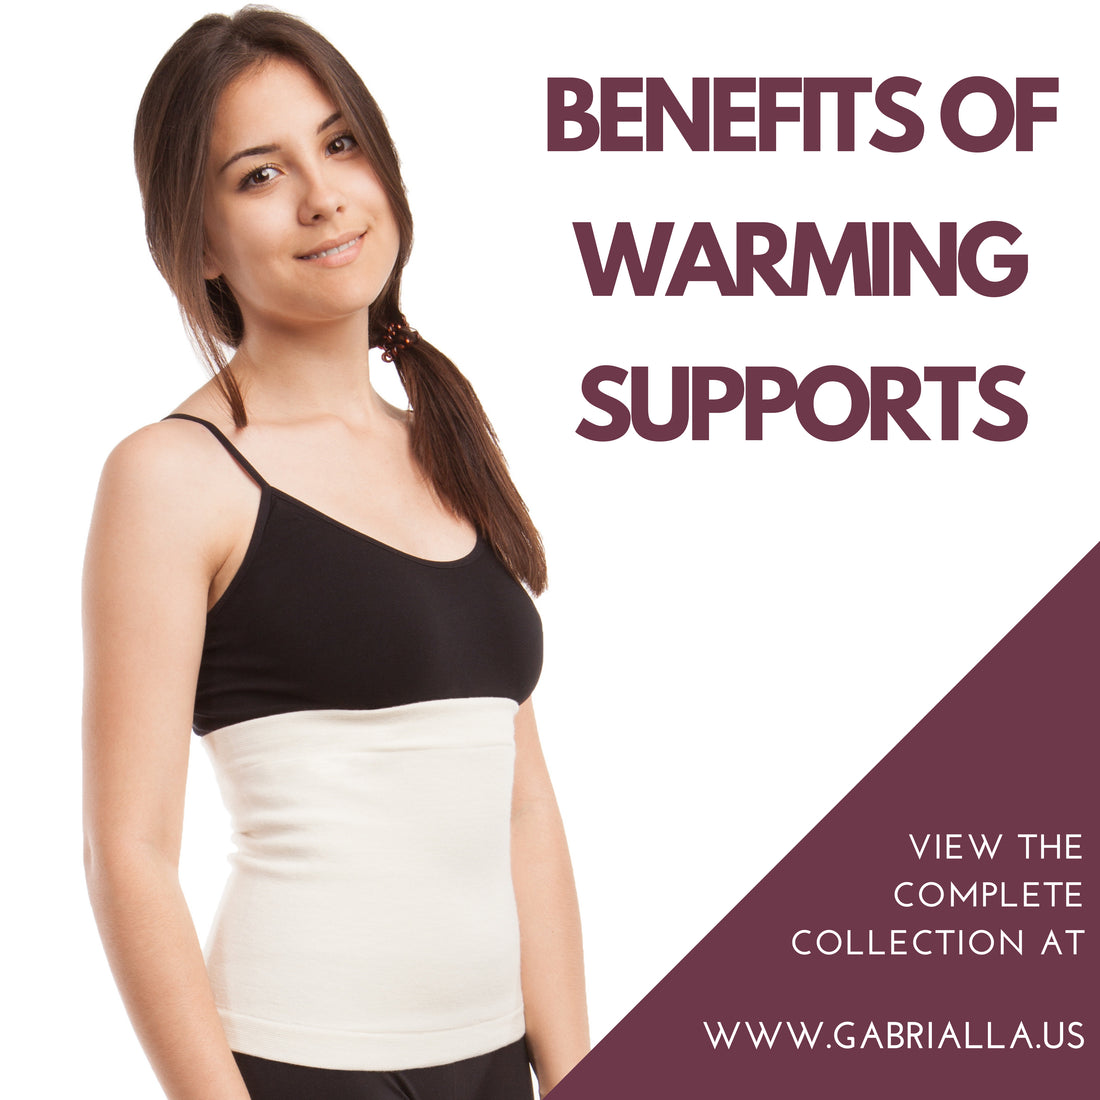 Gabrialla Warming Support